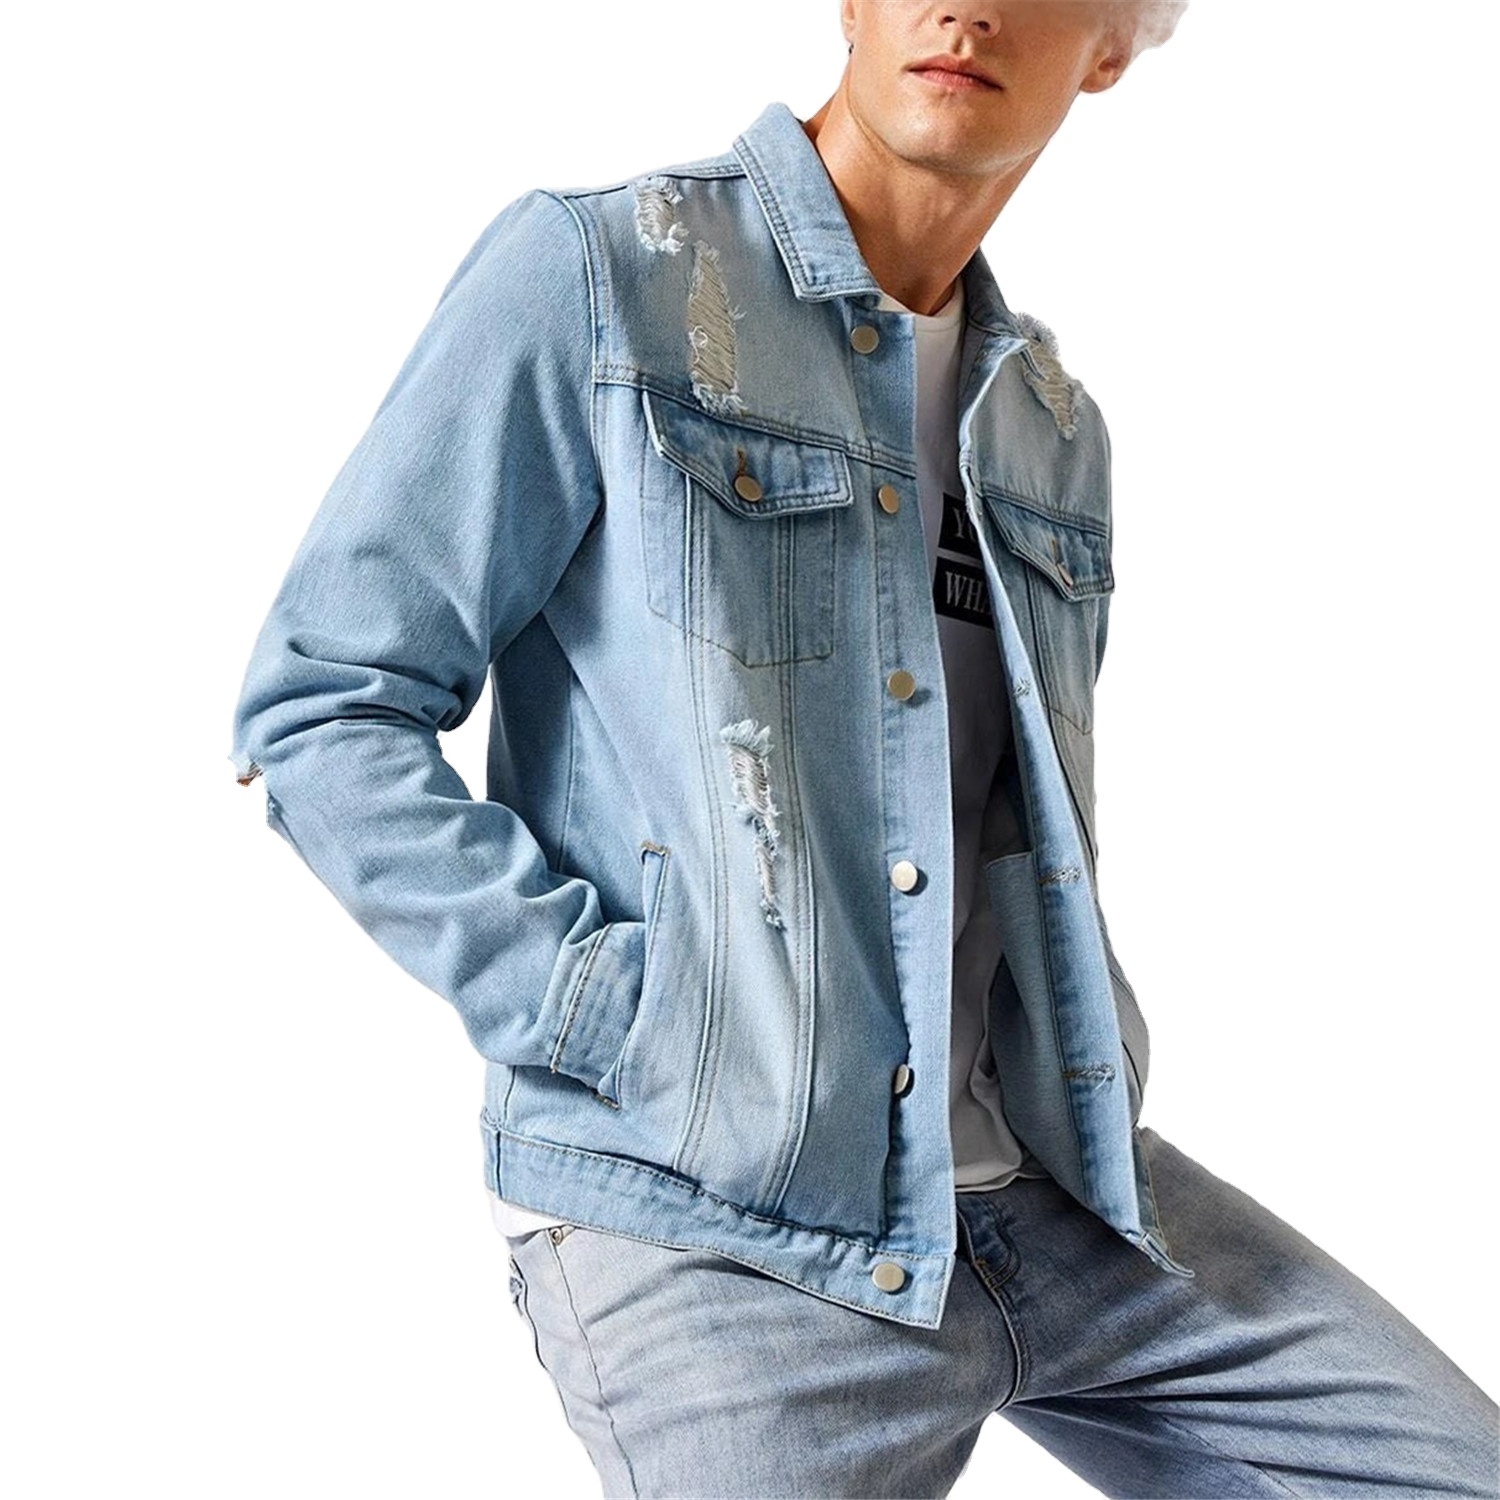 American hot sale jeans men jacket four pockets light blue ripped jacket denim